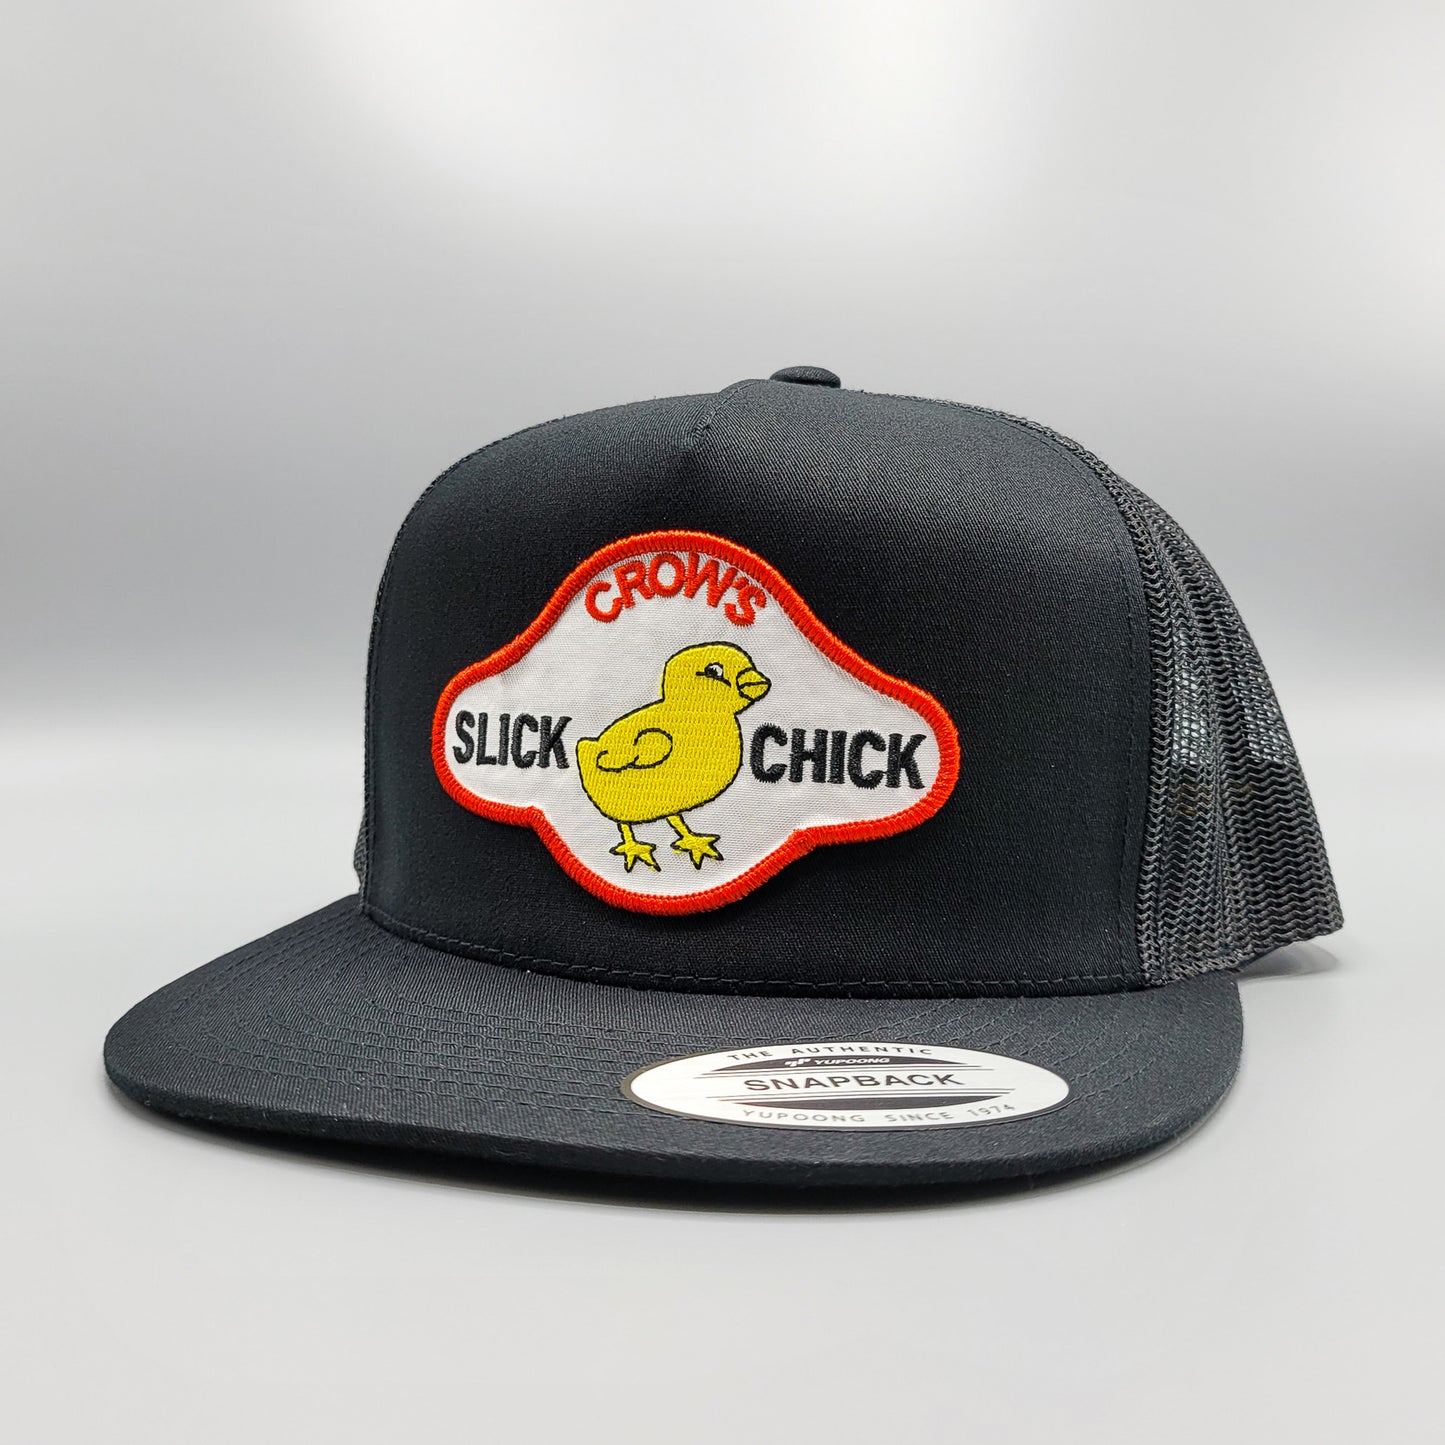 Crow's Slick Chick Farmer Trucker Hat